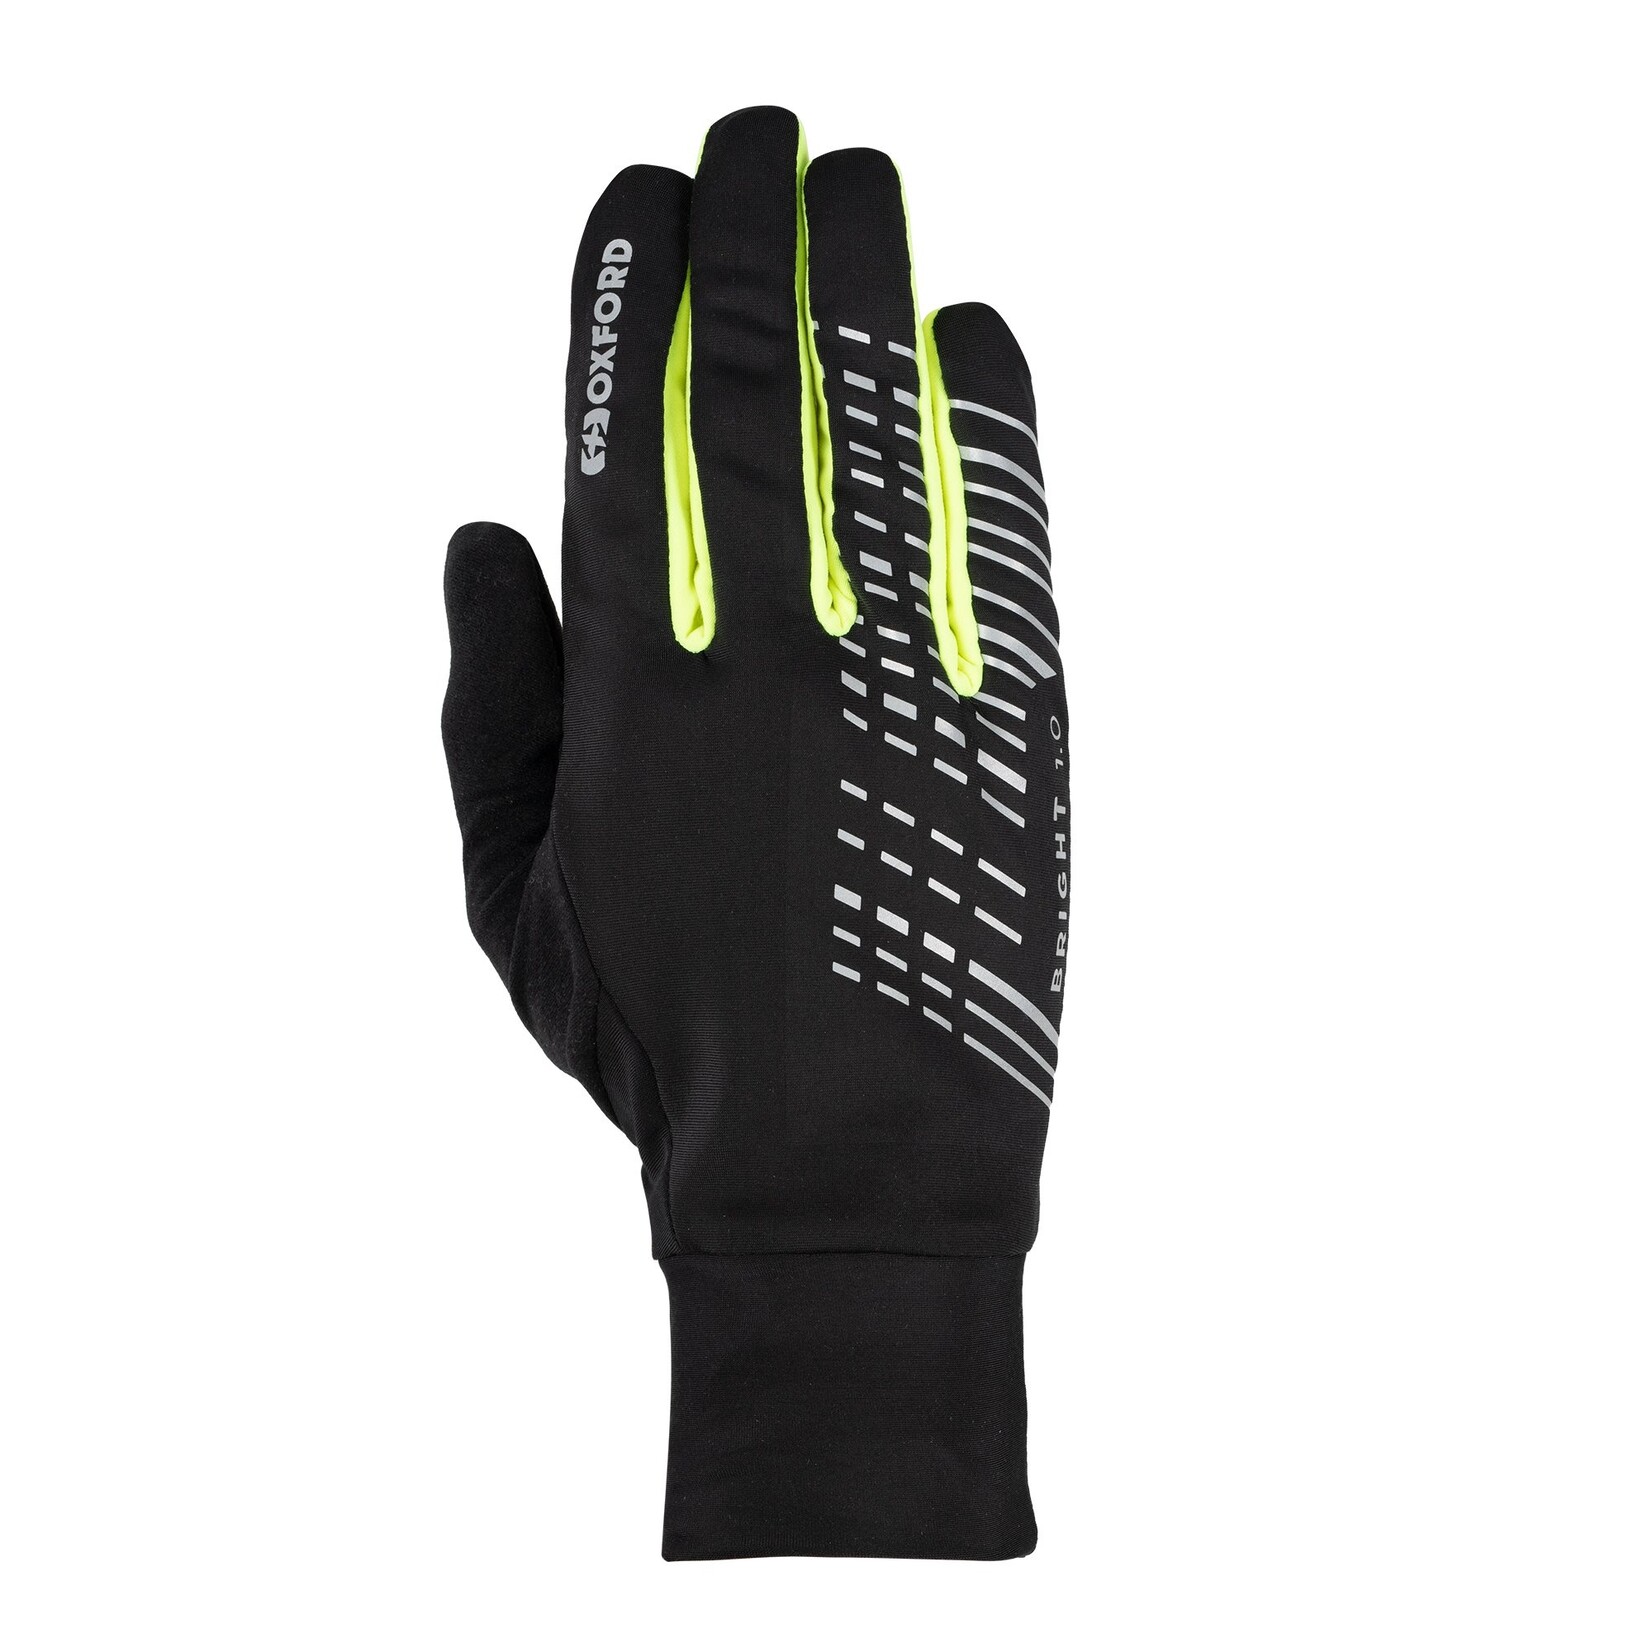 Oxford Oxford Bright Glove 1.0 Thermal